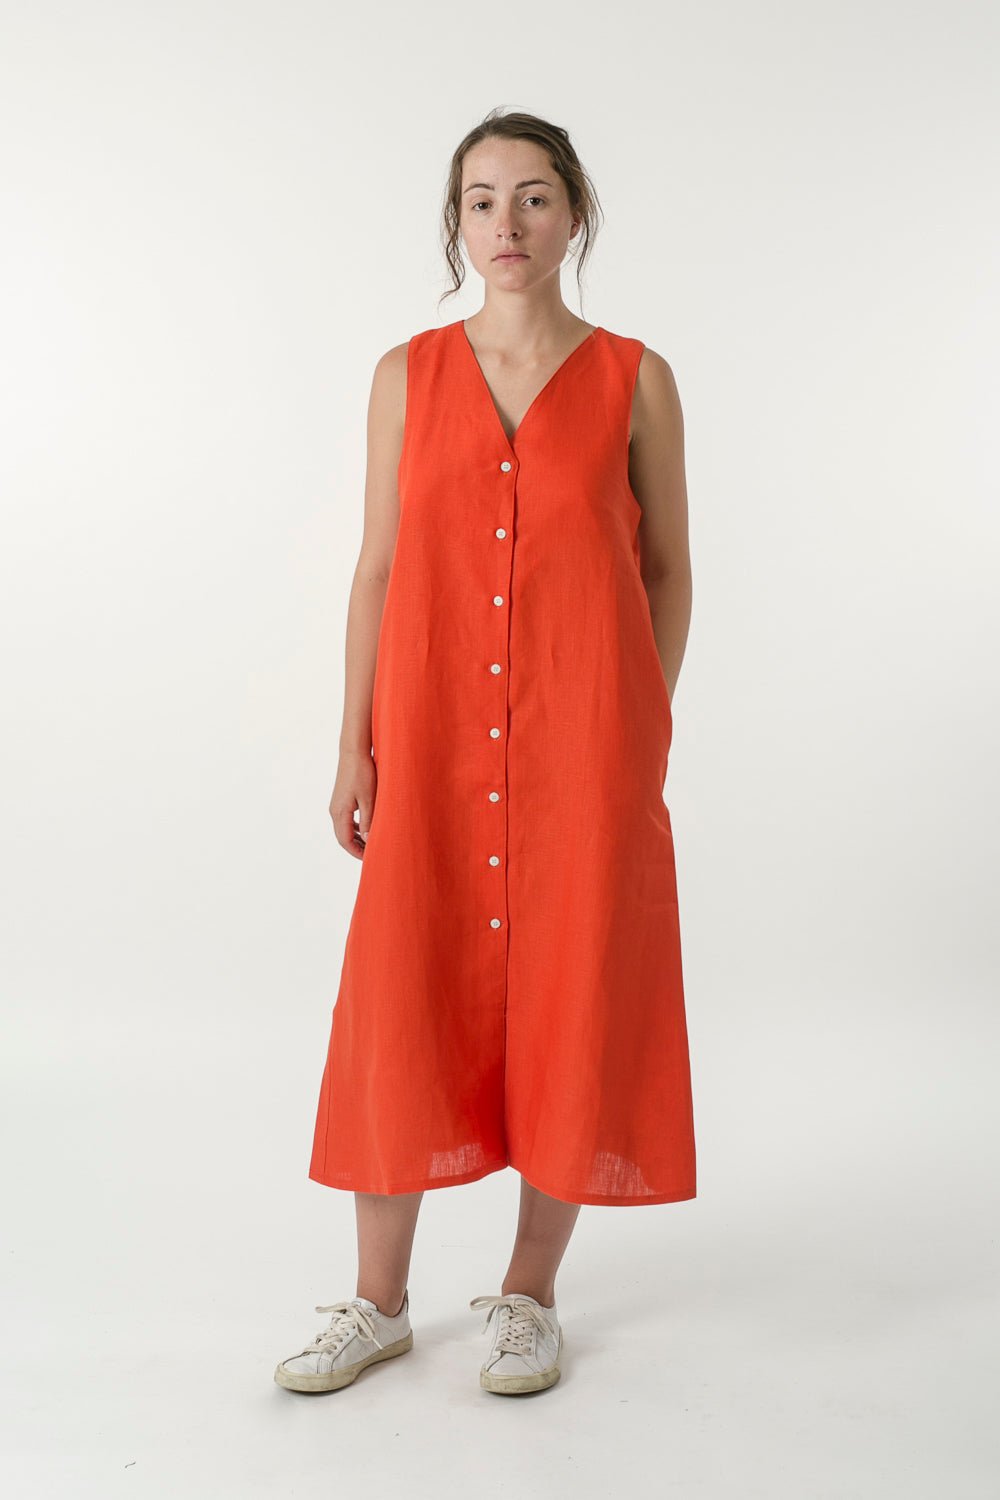 Hemp Linen Button V Dress - Ensemble Studios